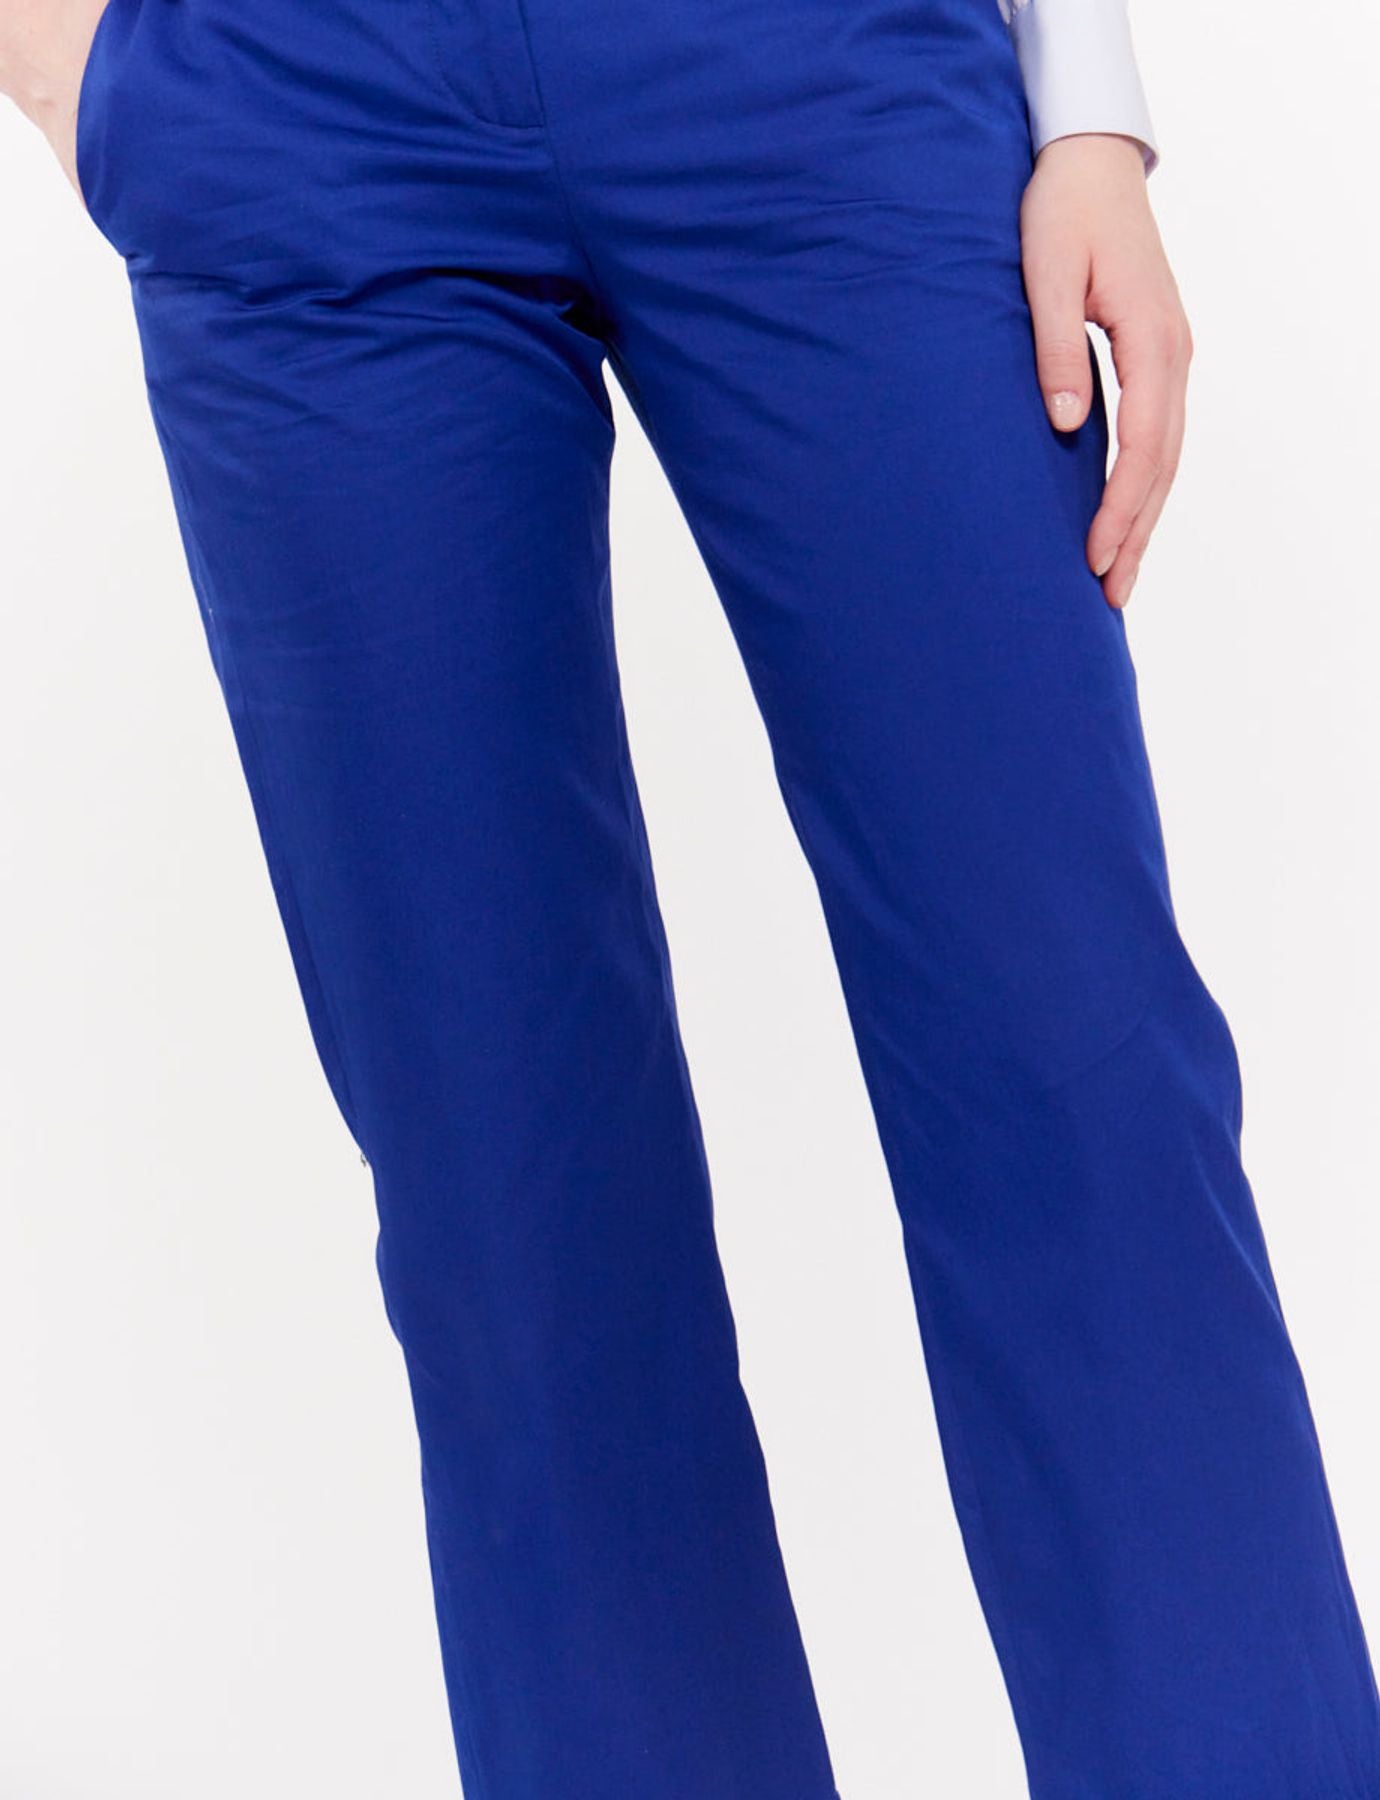 pantaloni-francesca-blu